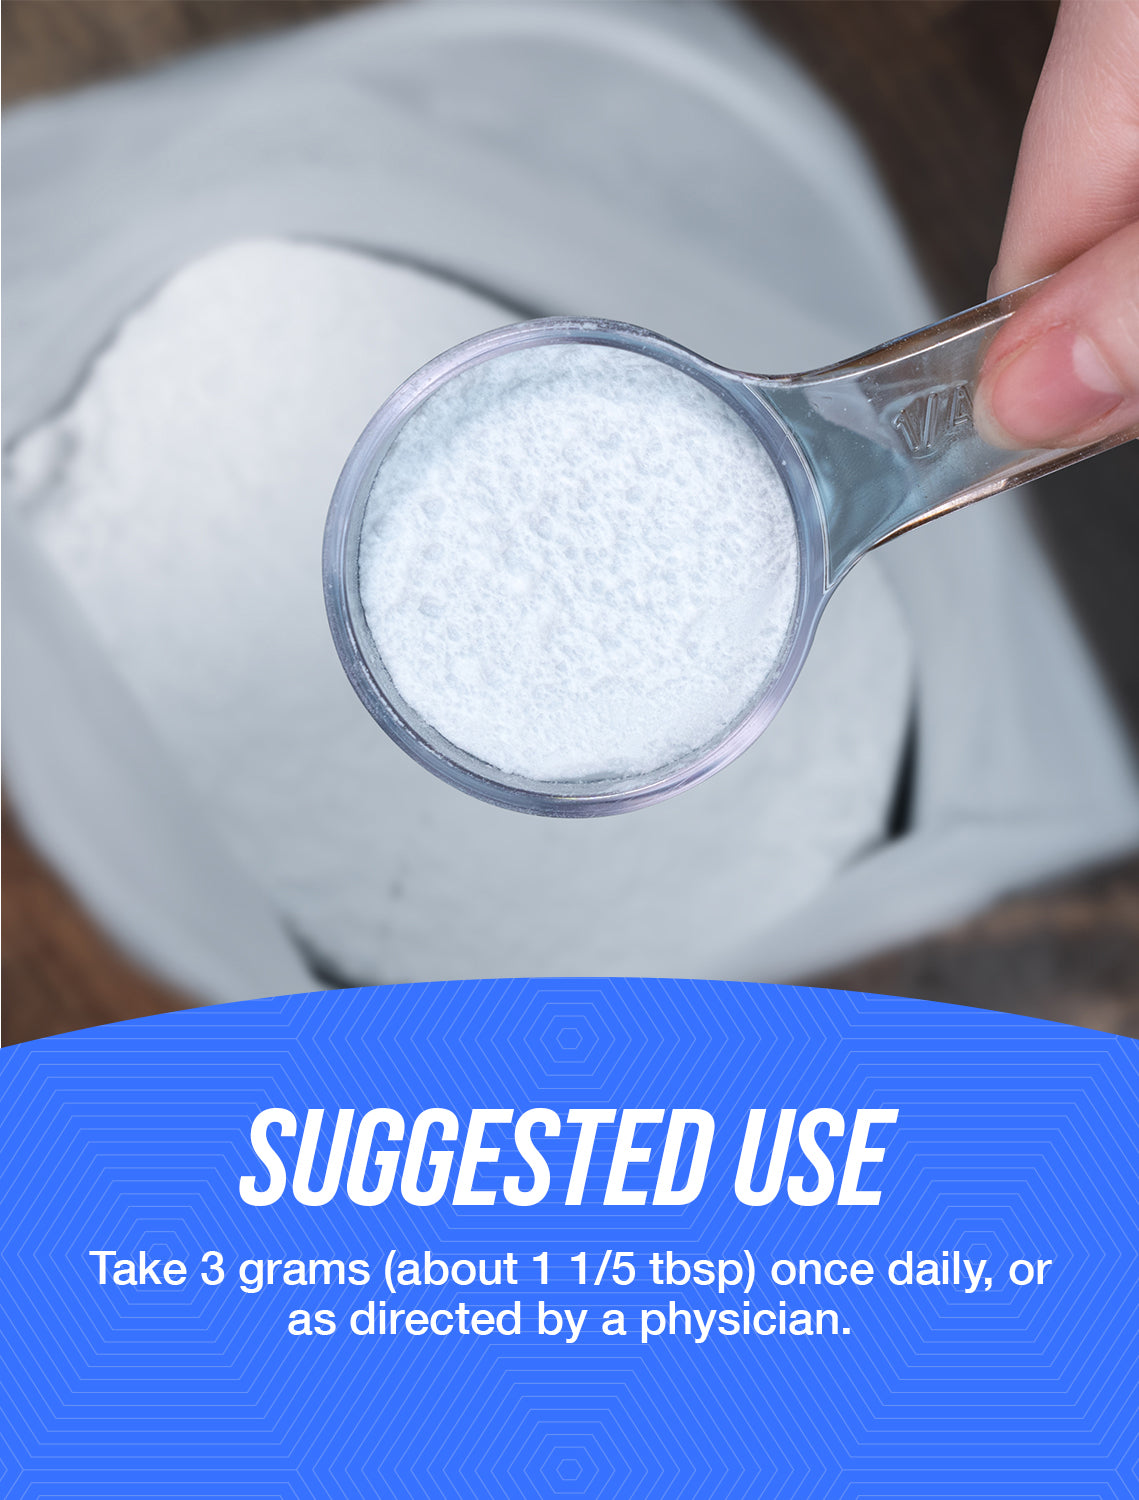 Sodium D-Aspartate powder suggested use image